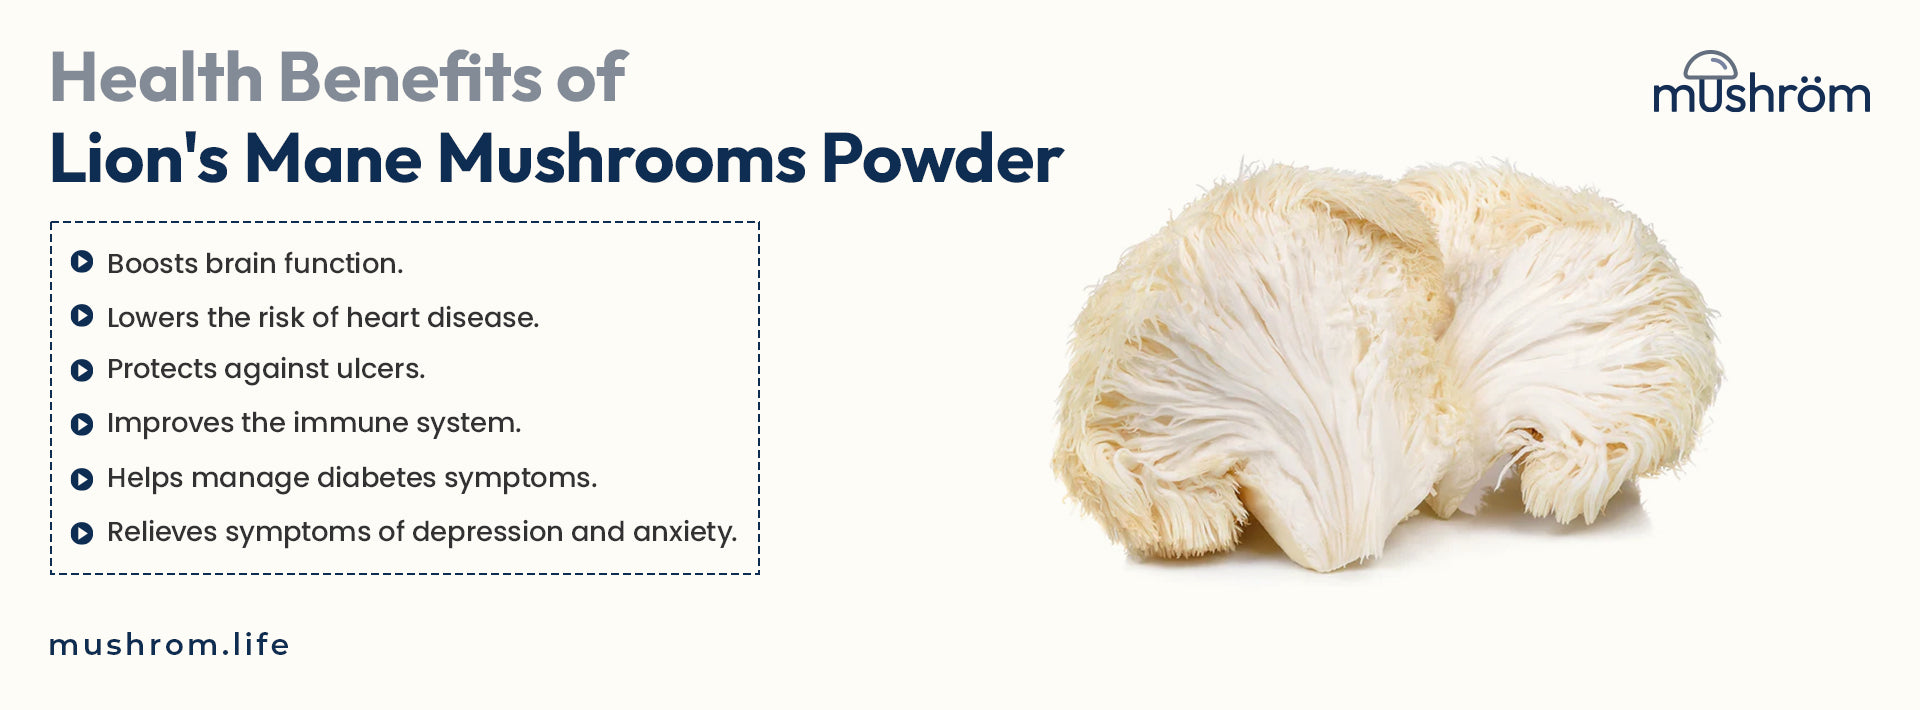 Health Benefits Of Lion's Mane Mushrooms Powder